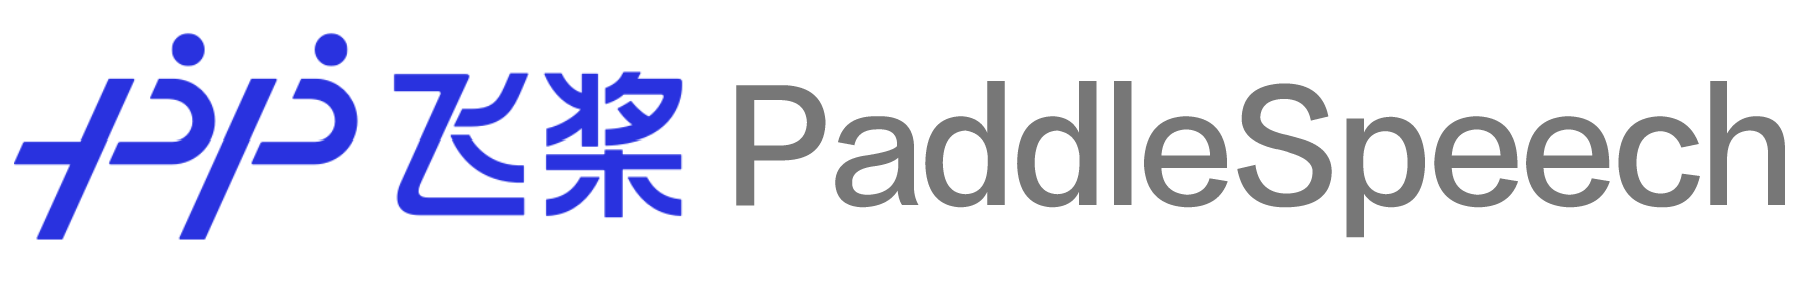 PaddleSpeech_logo.png